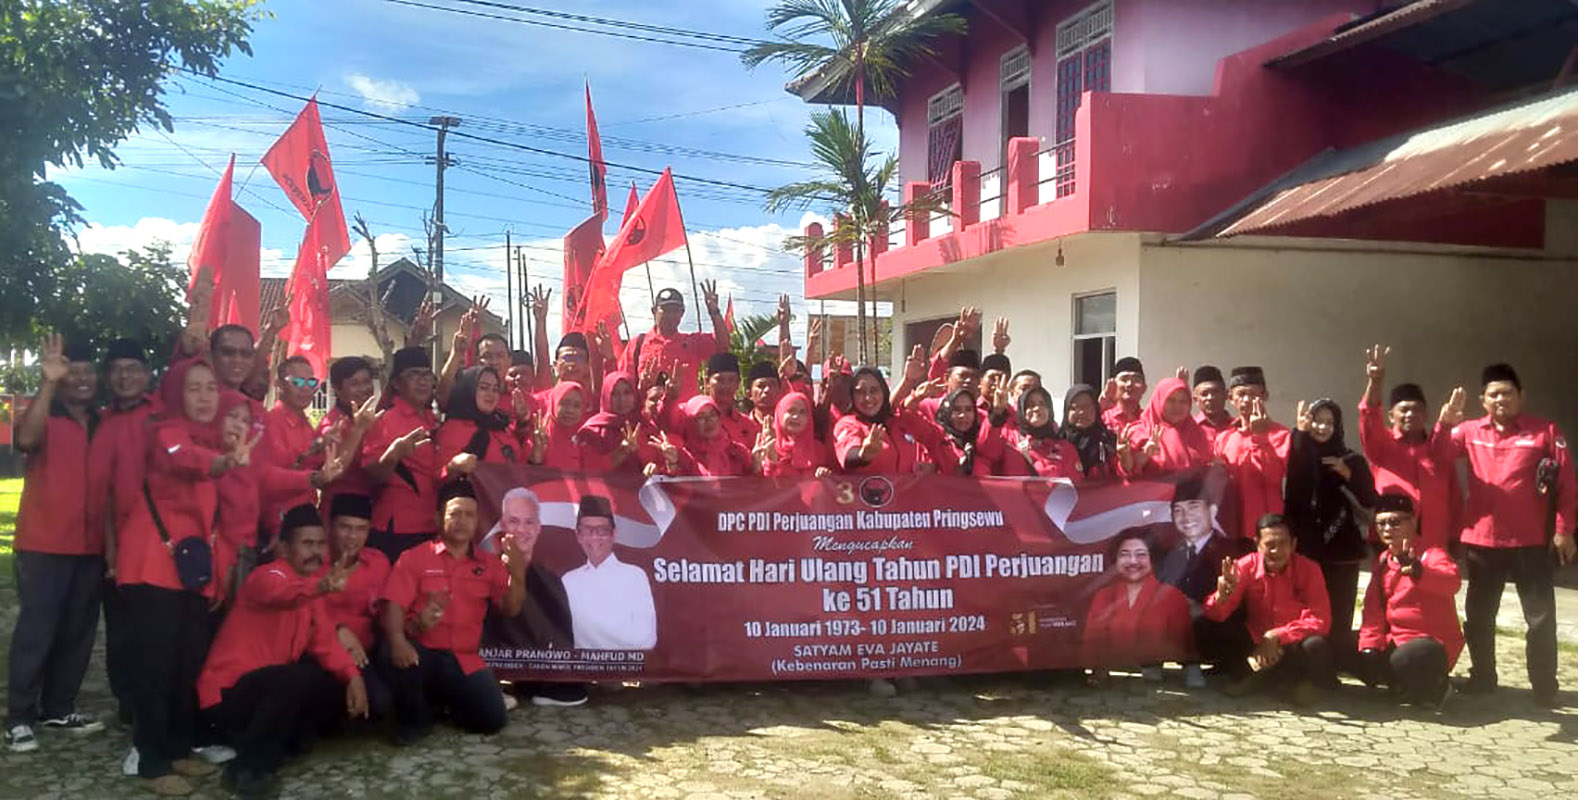 HUT Ke-51 PDIP di Pringsewu Lampung, Gelorakan Semangat Kebenaran Pasti Menang 